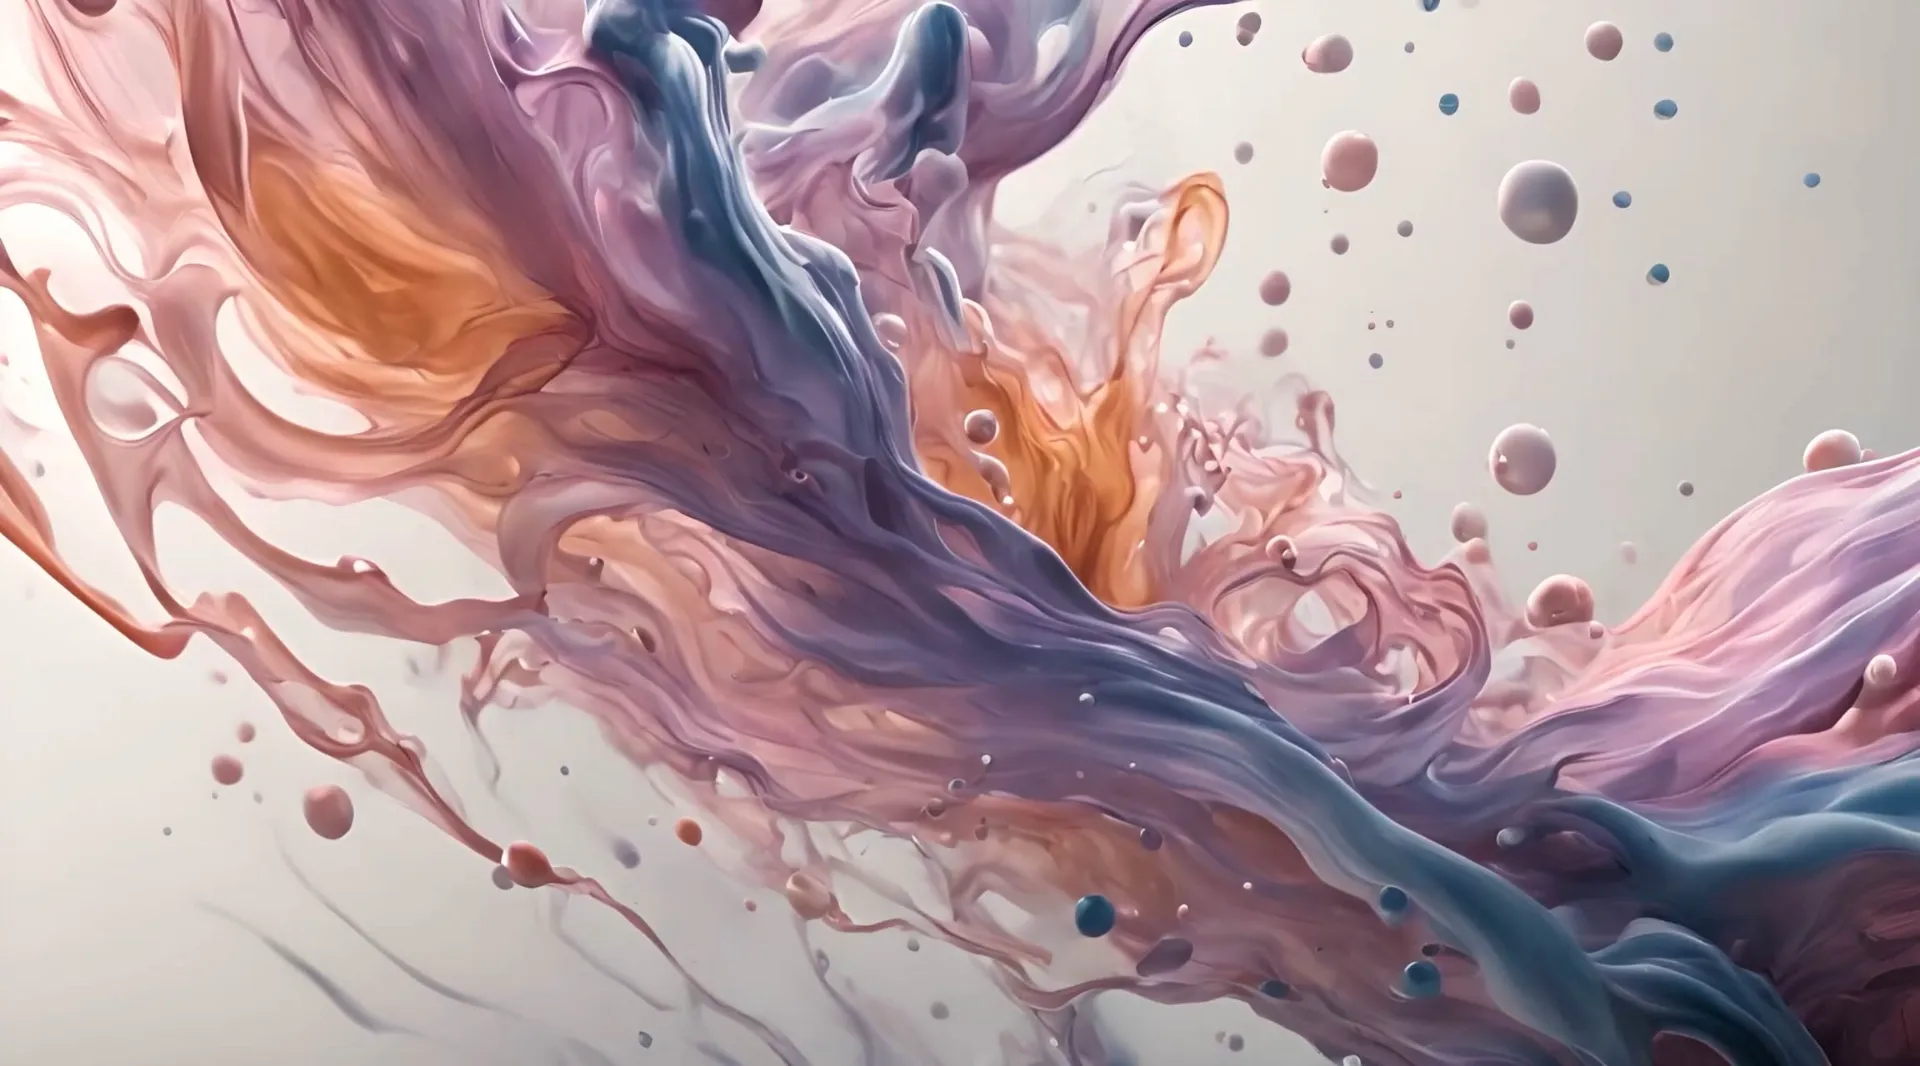 Fluid Art Motion Digital Backdrop Video